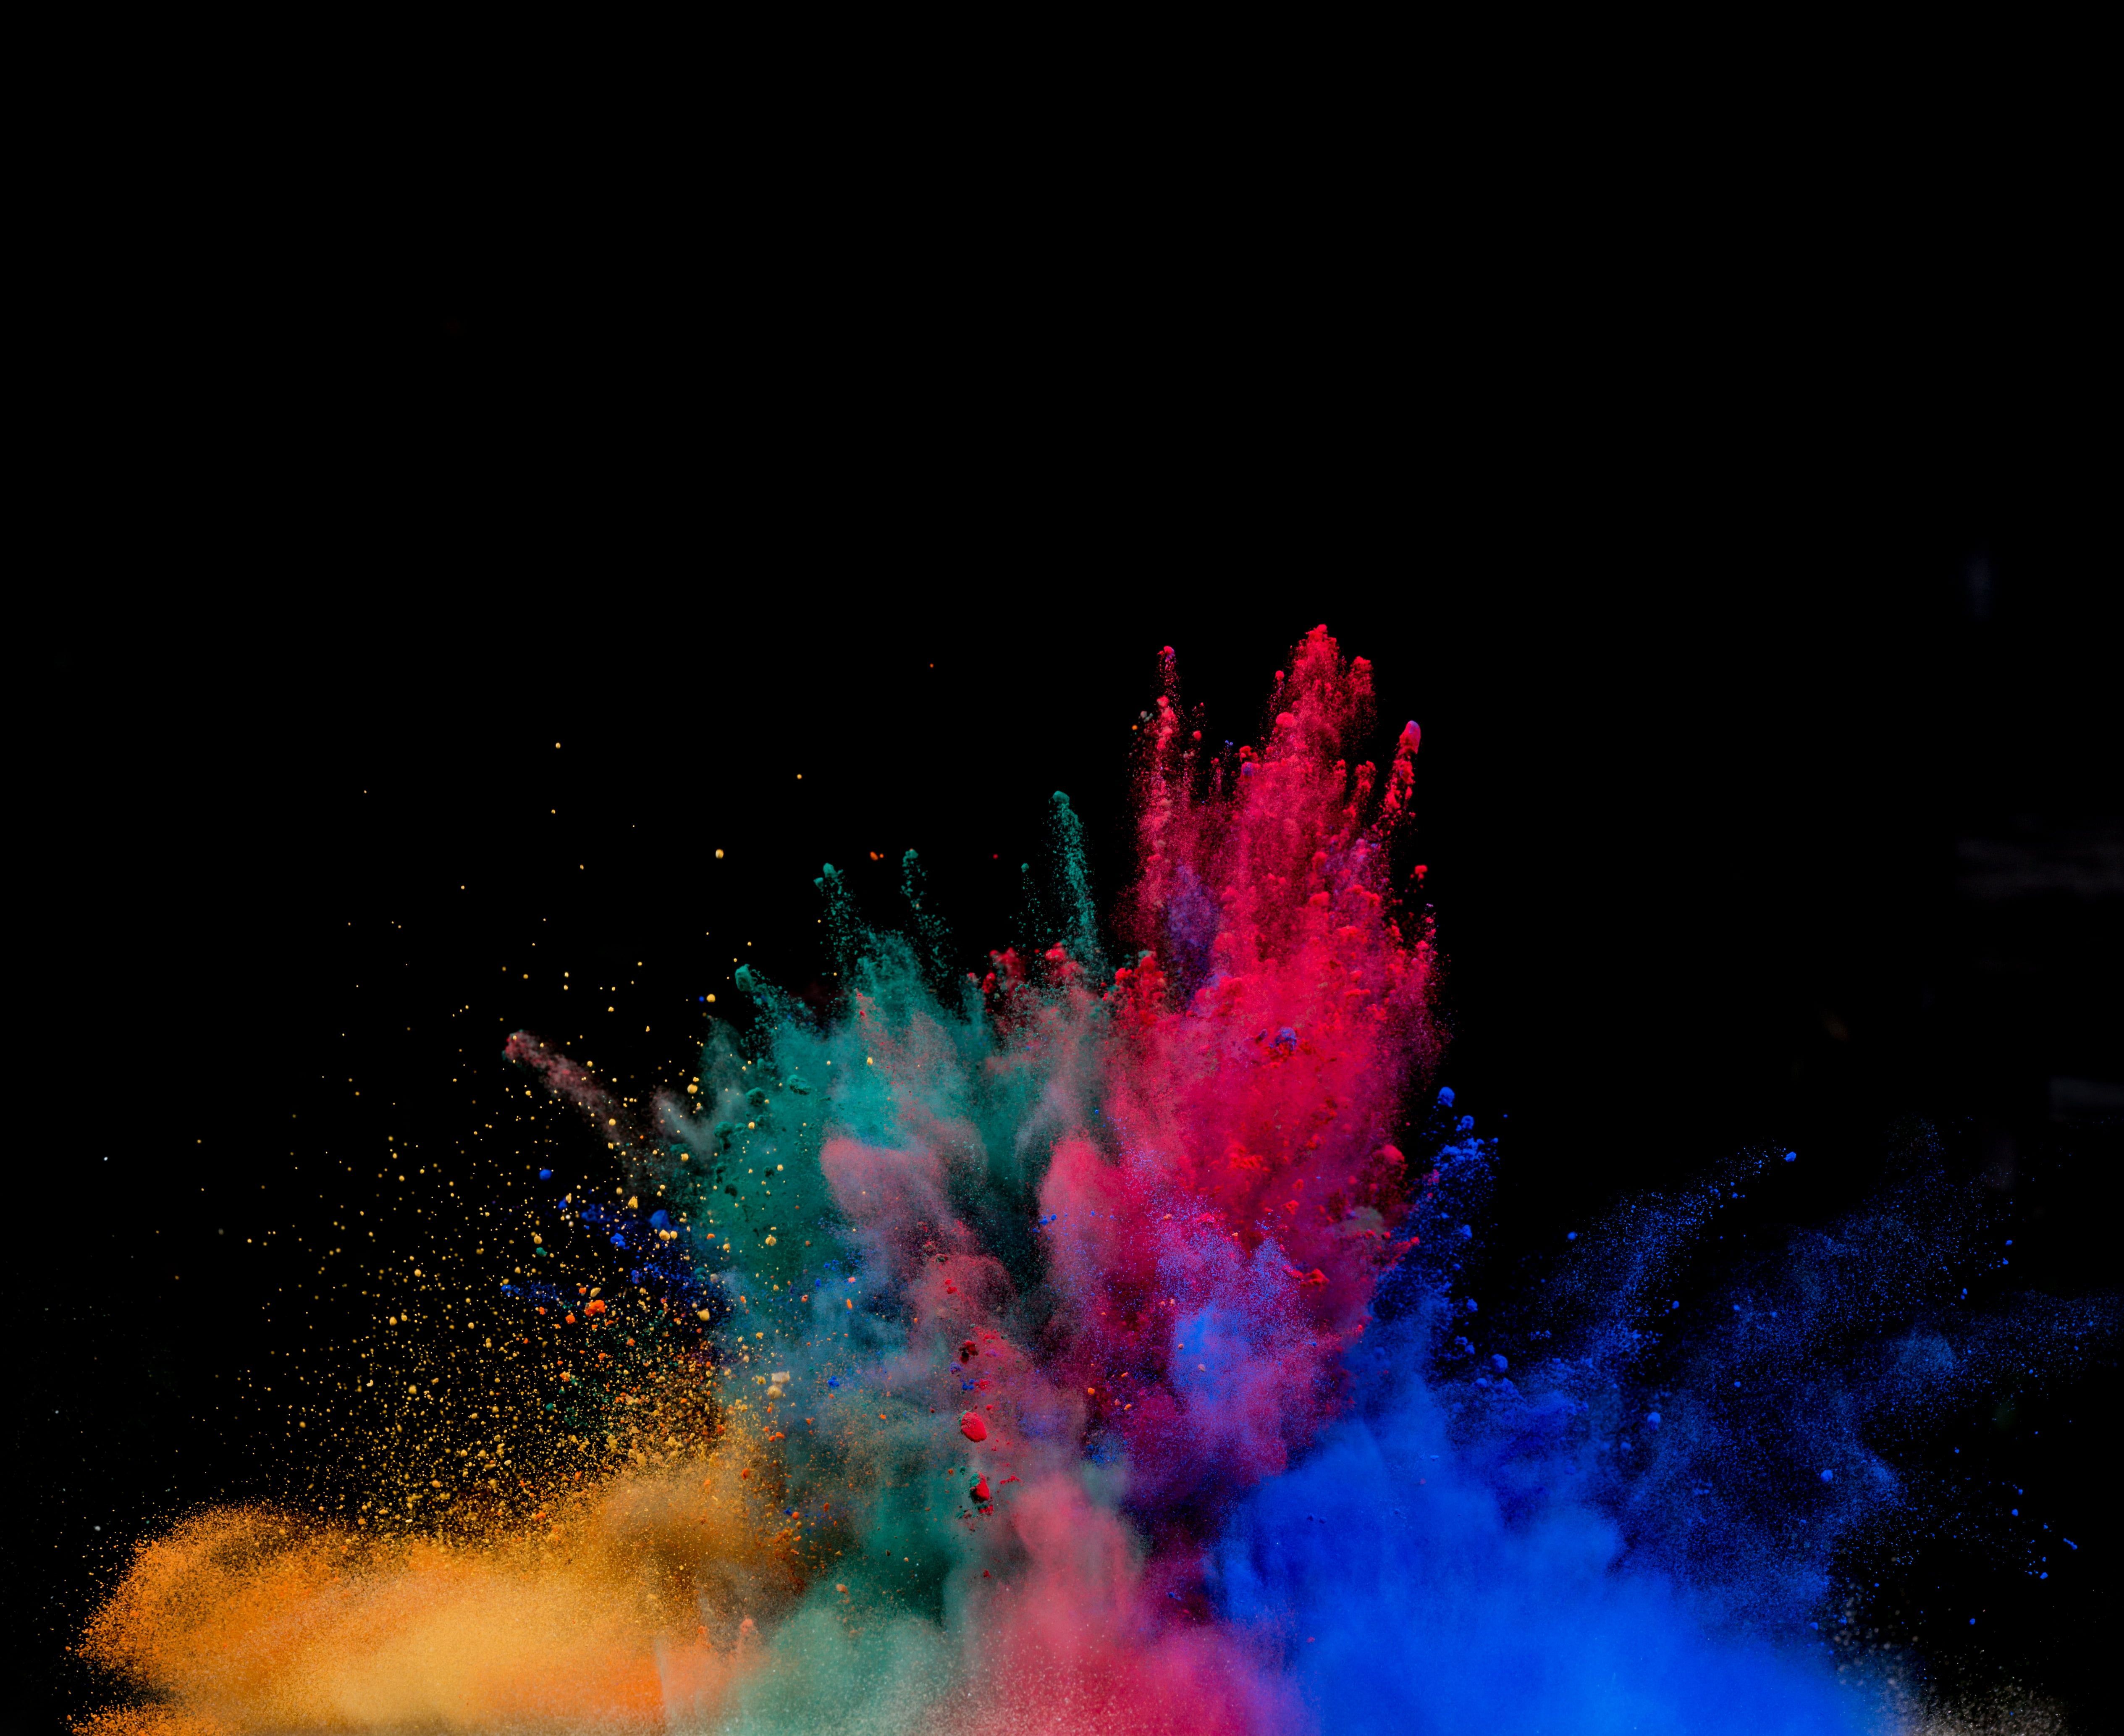 multicolored Holi powders powder explosion #powder #colorful K #wallpaper #hdwallpaper #desktop. Motion wallpaper, Galaxy phone wallpaper, Colorful wallpaper